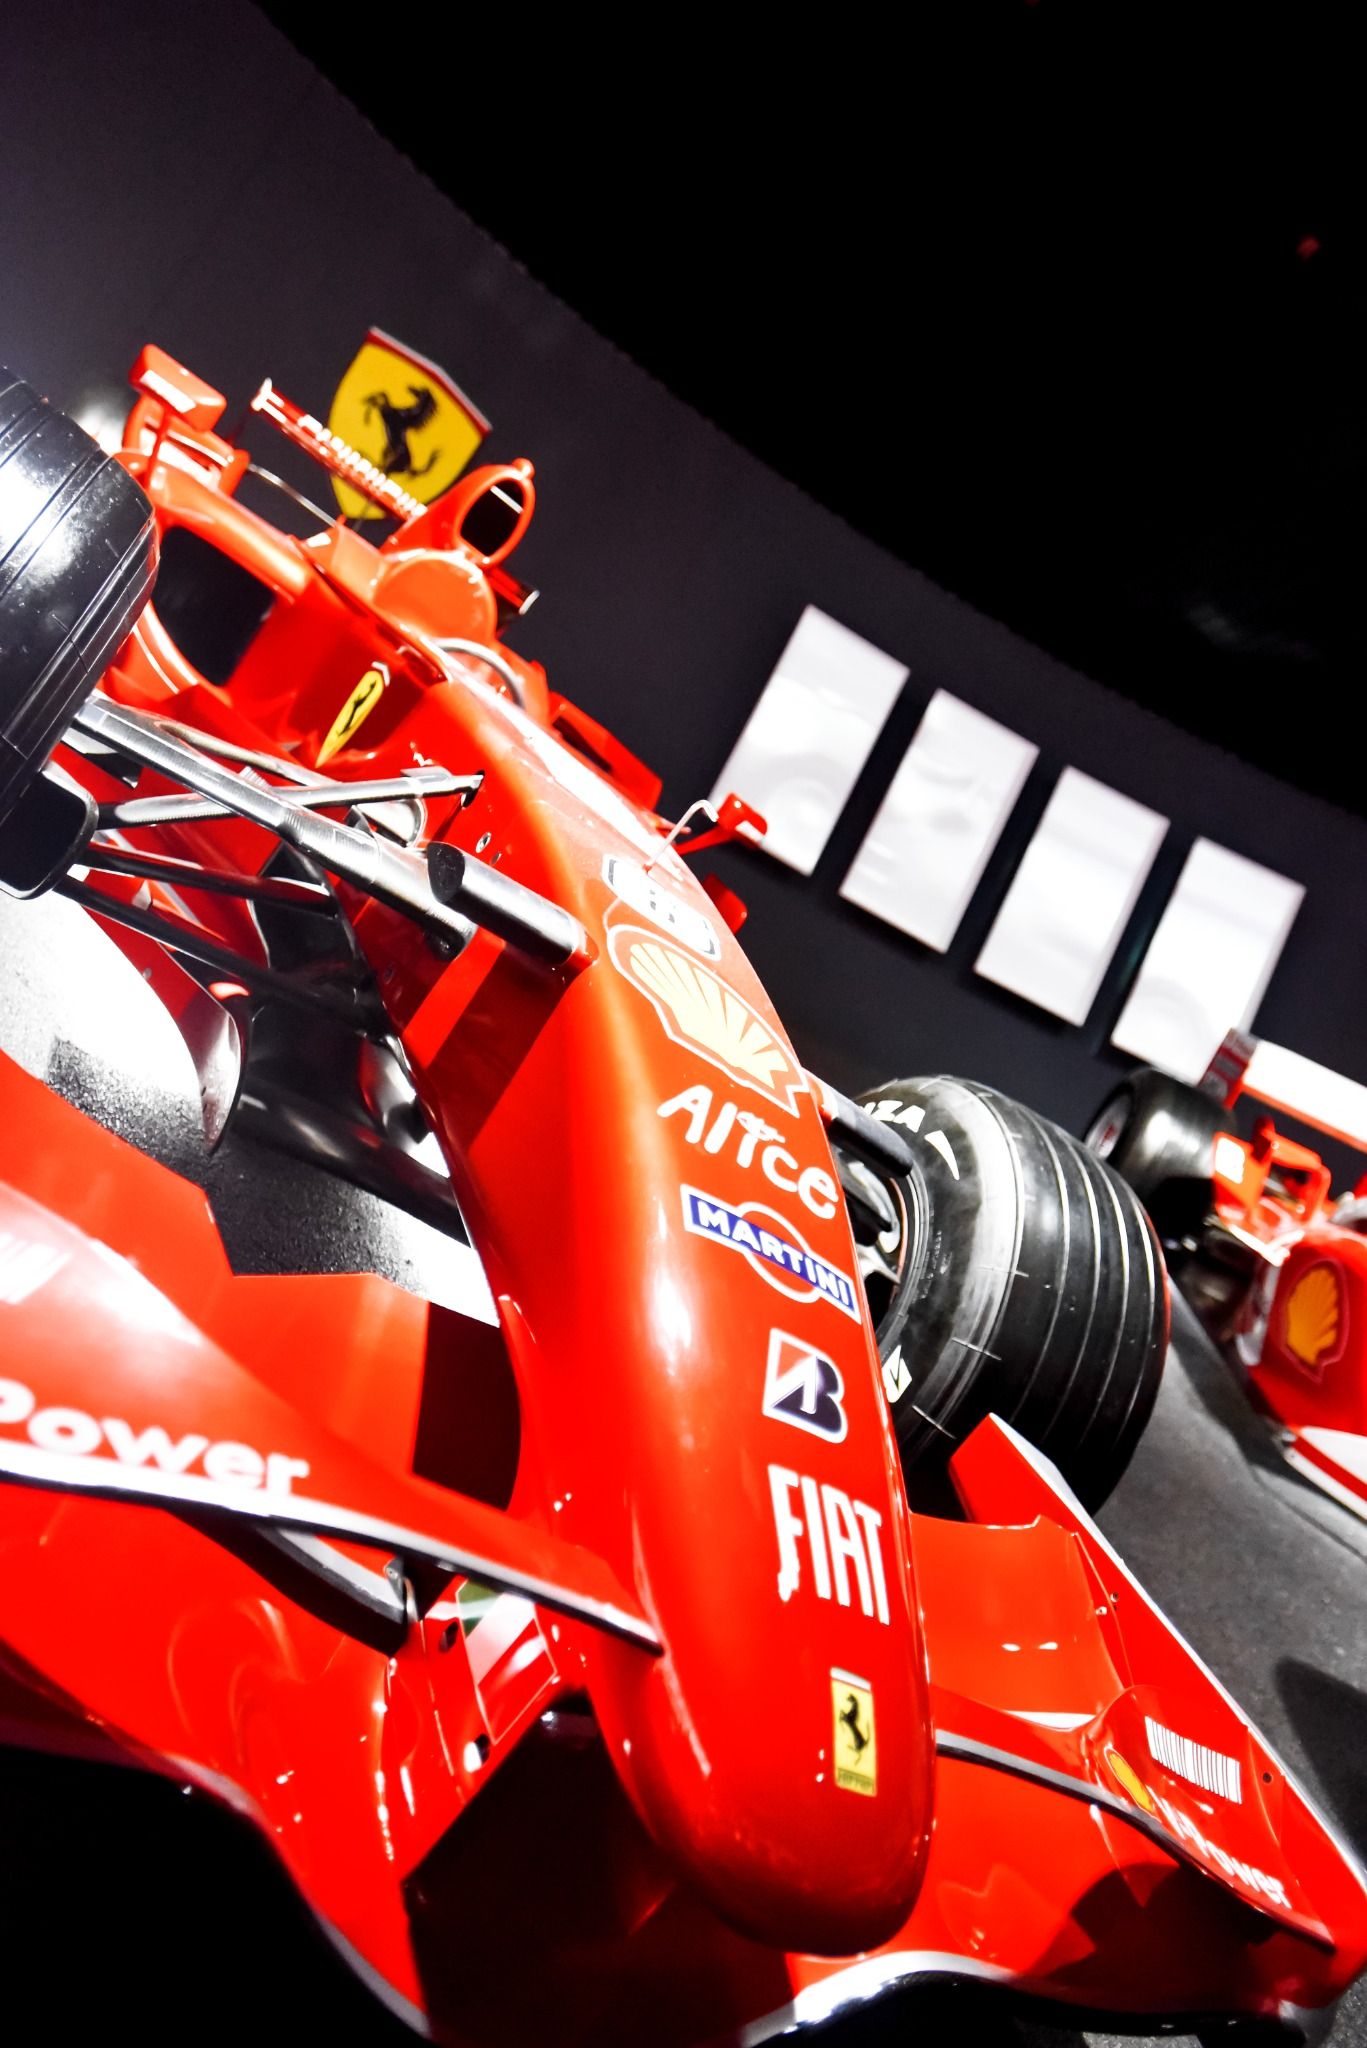 Side angle of a red Ferrari F1 car